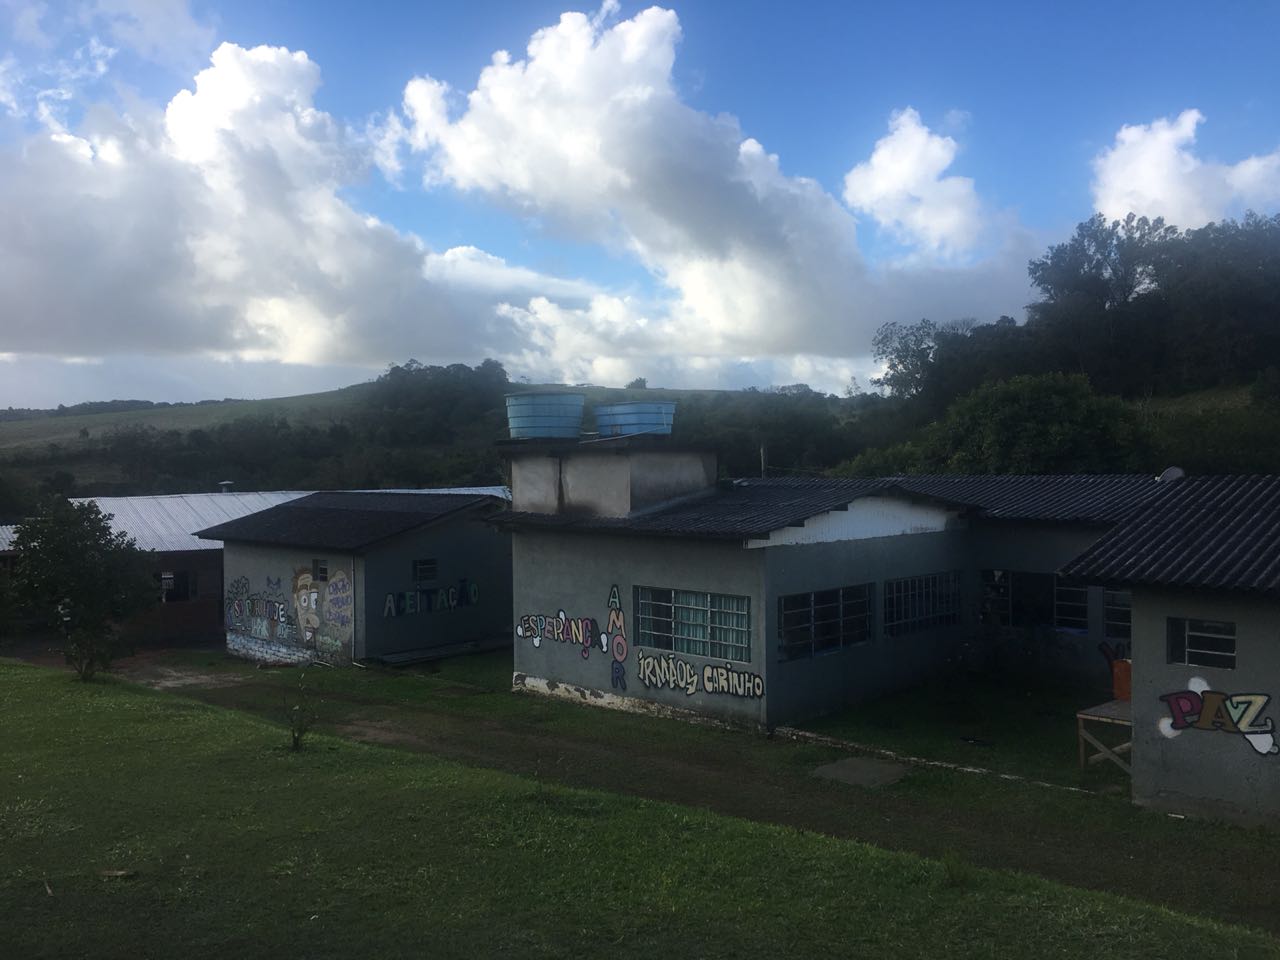 11/07/2018 - Professor Issur visita comunidade terapêutica em Lomba Grande